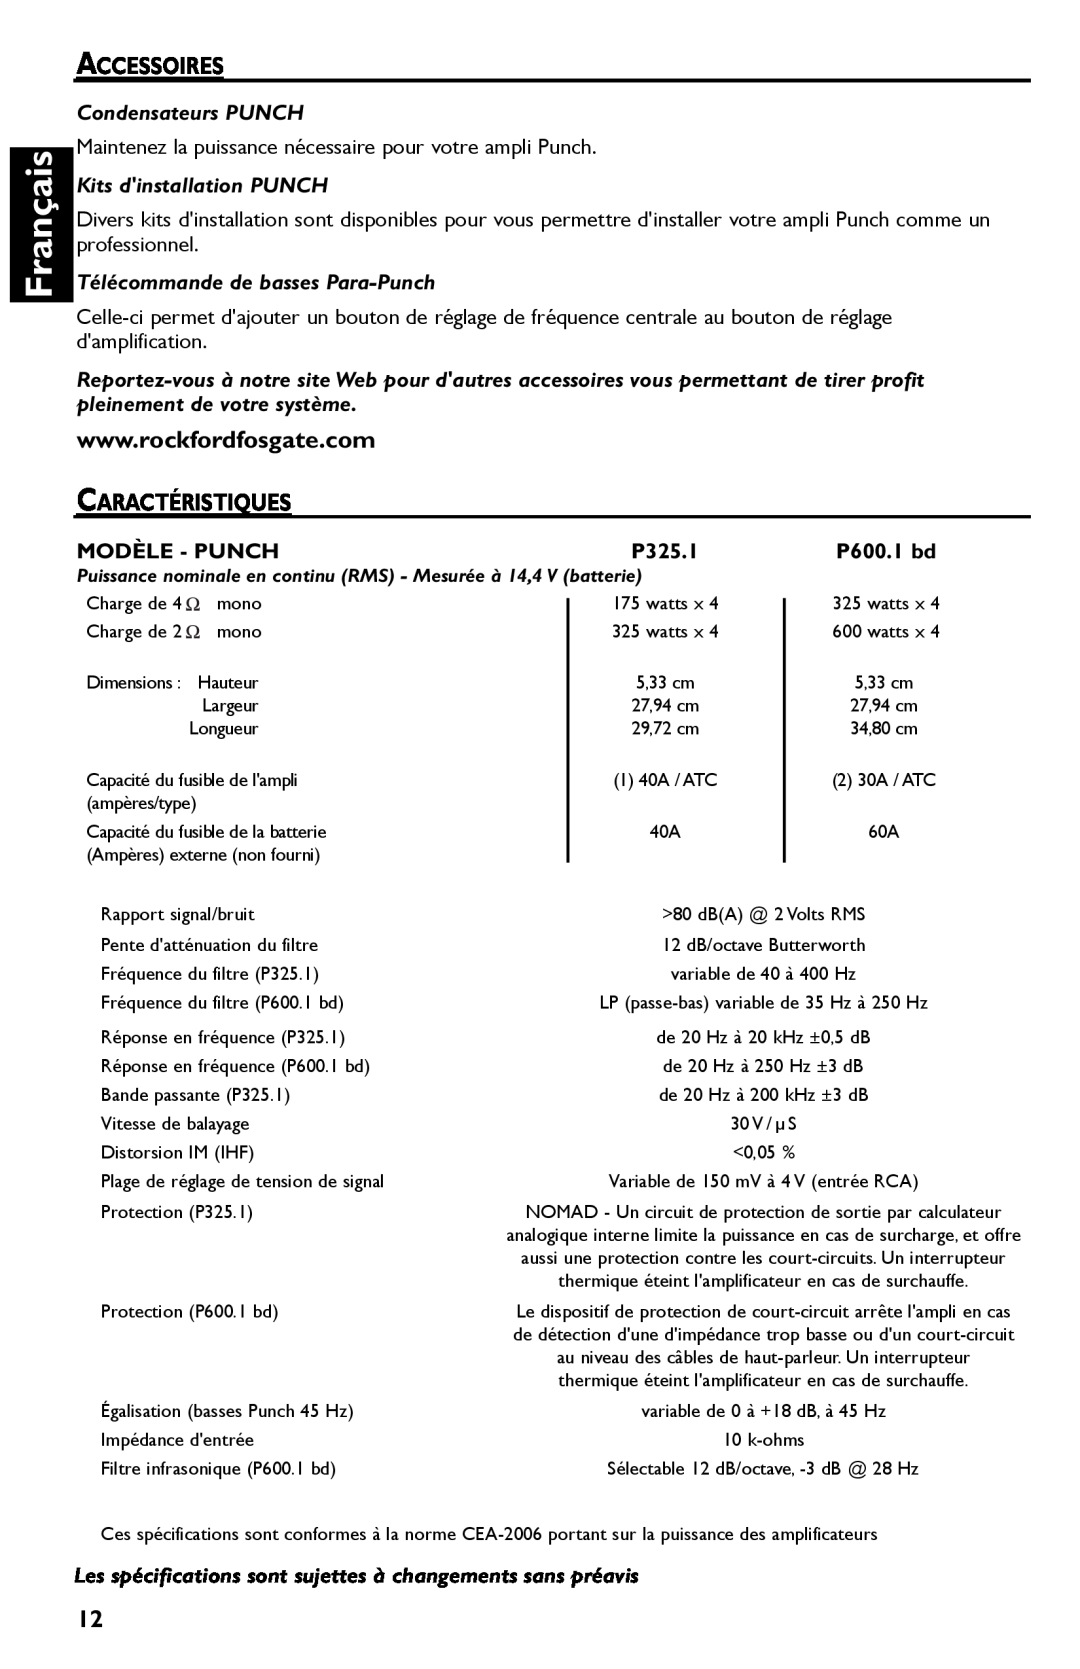 Rockford Fosgate P600..I bd, P325.I manual Français, Accessoires, Condensateurs PUNCH, Kits dinstallation PUNCH 